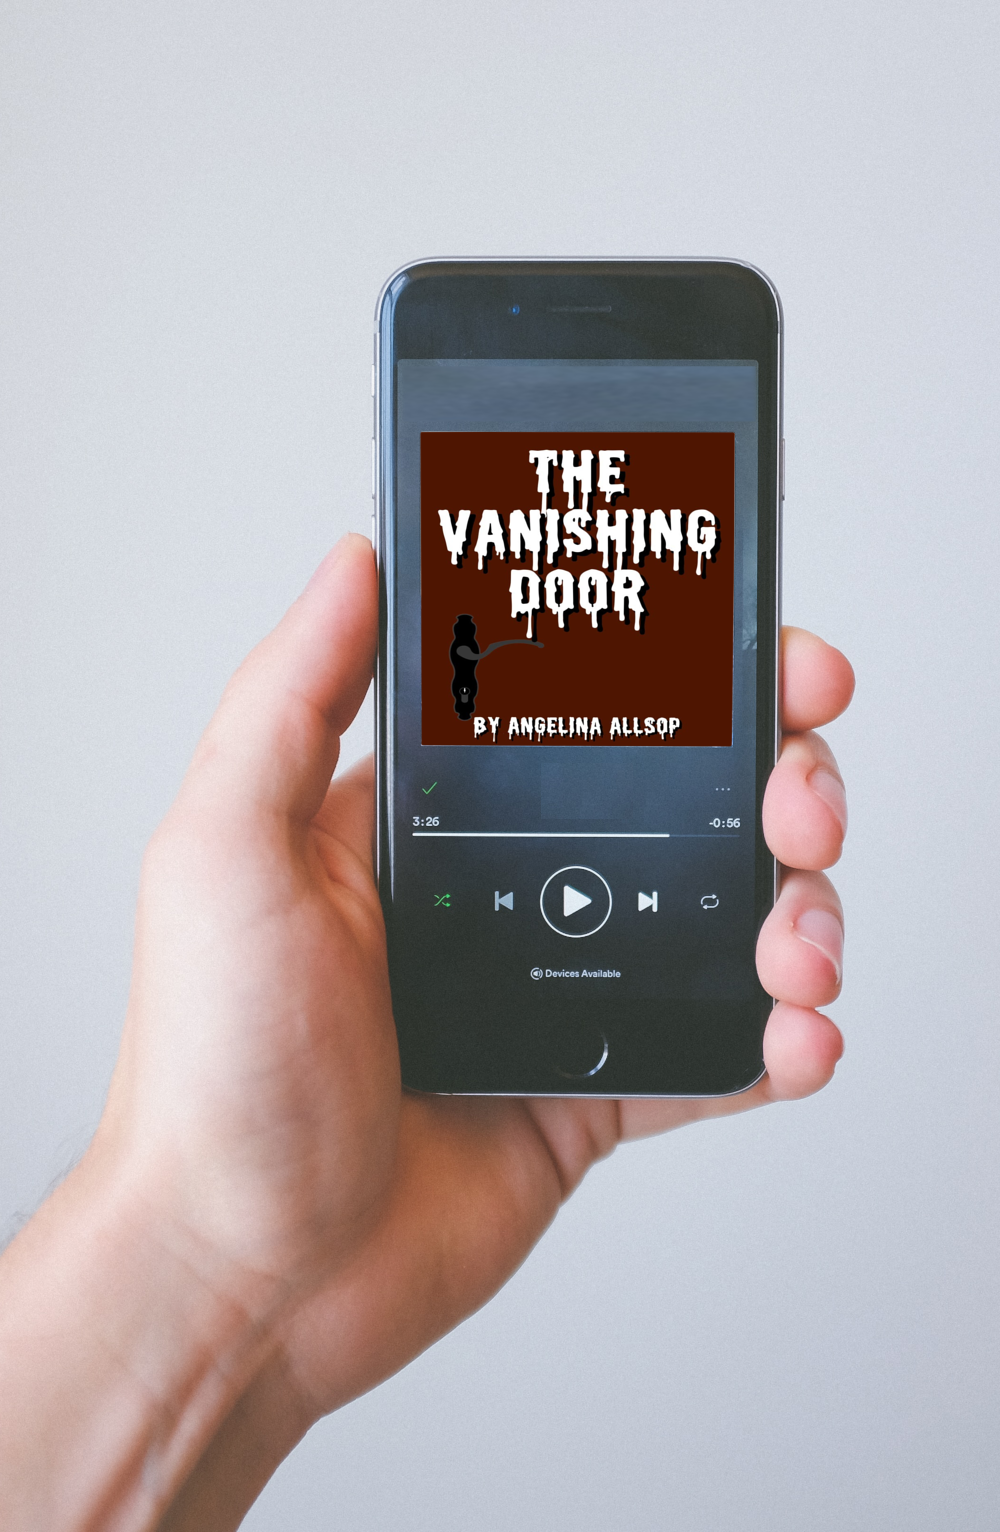 The Vanishing Door Mini Story